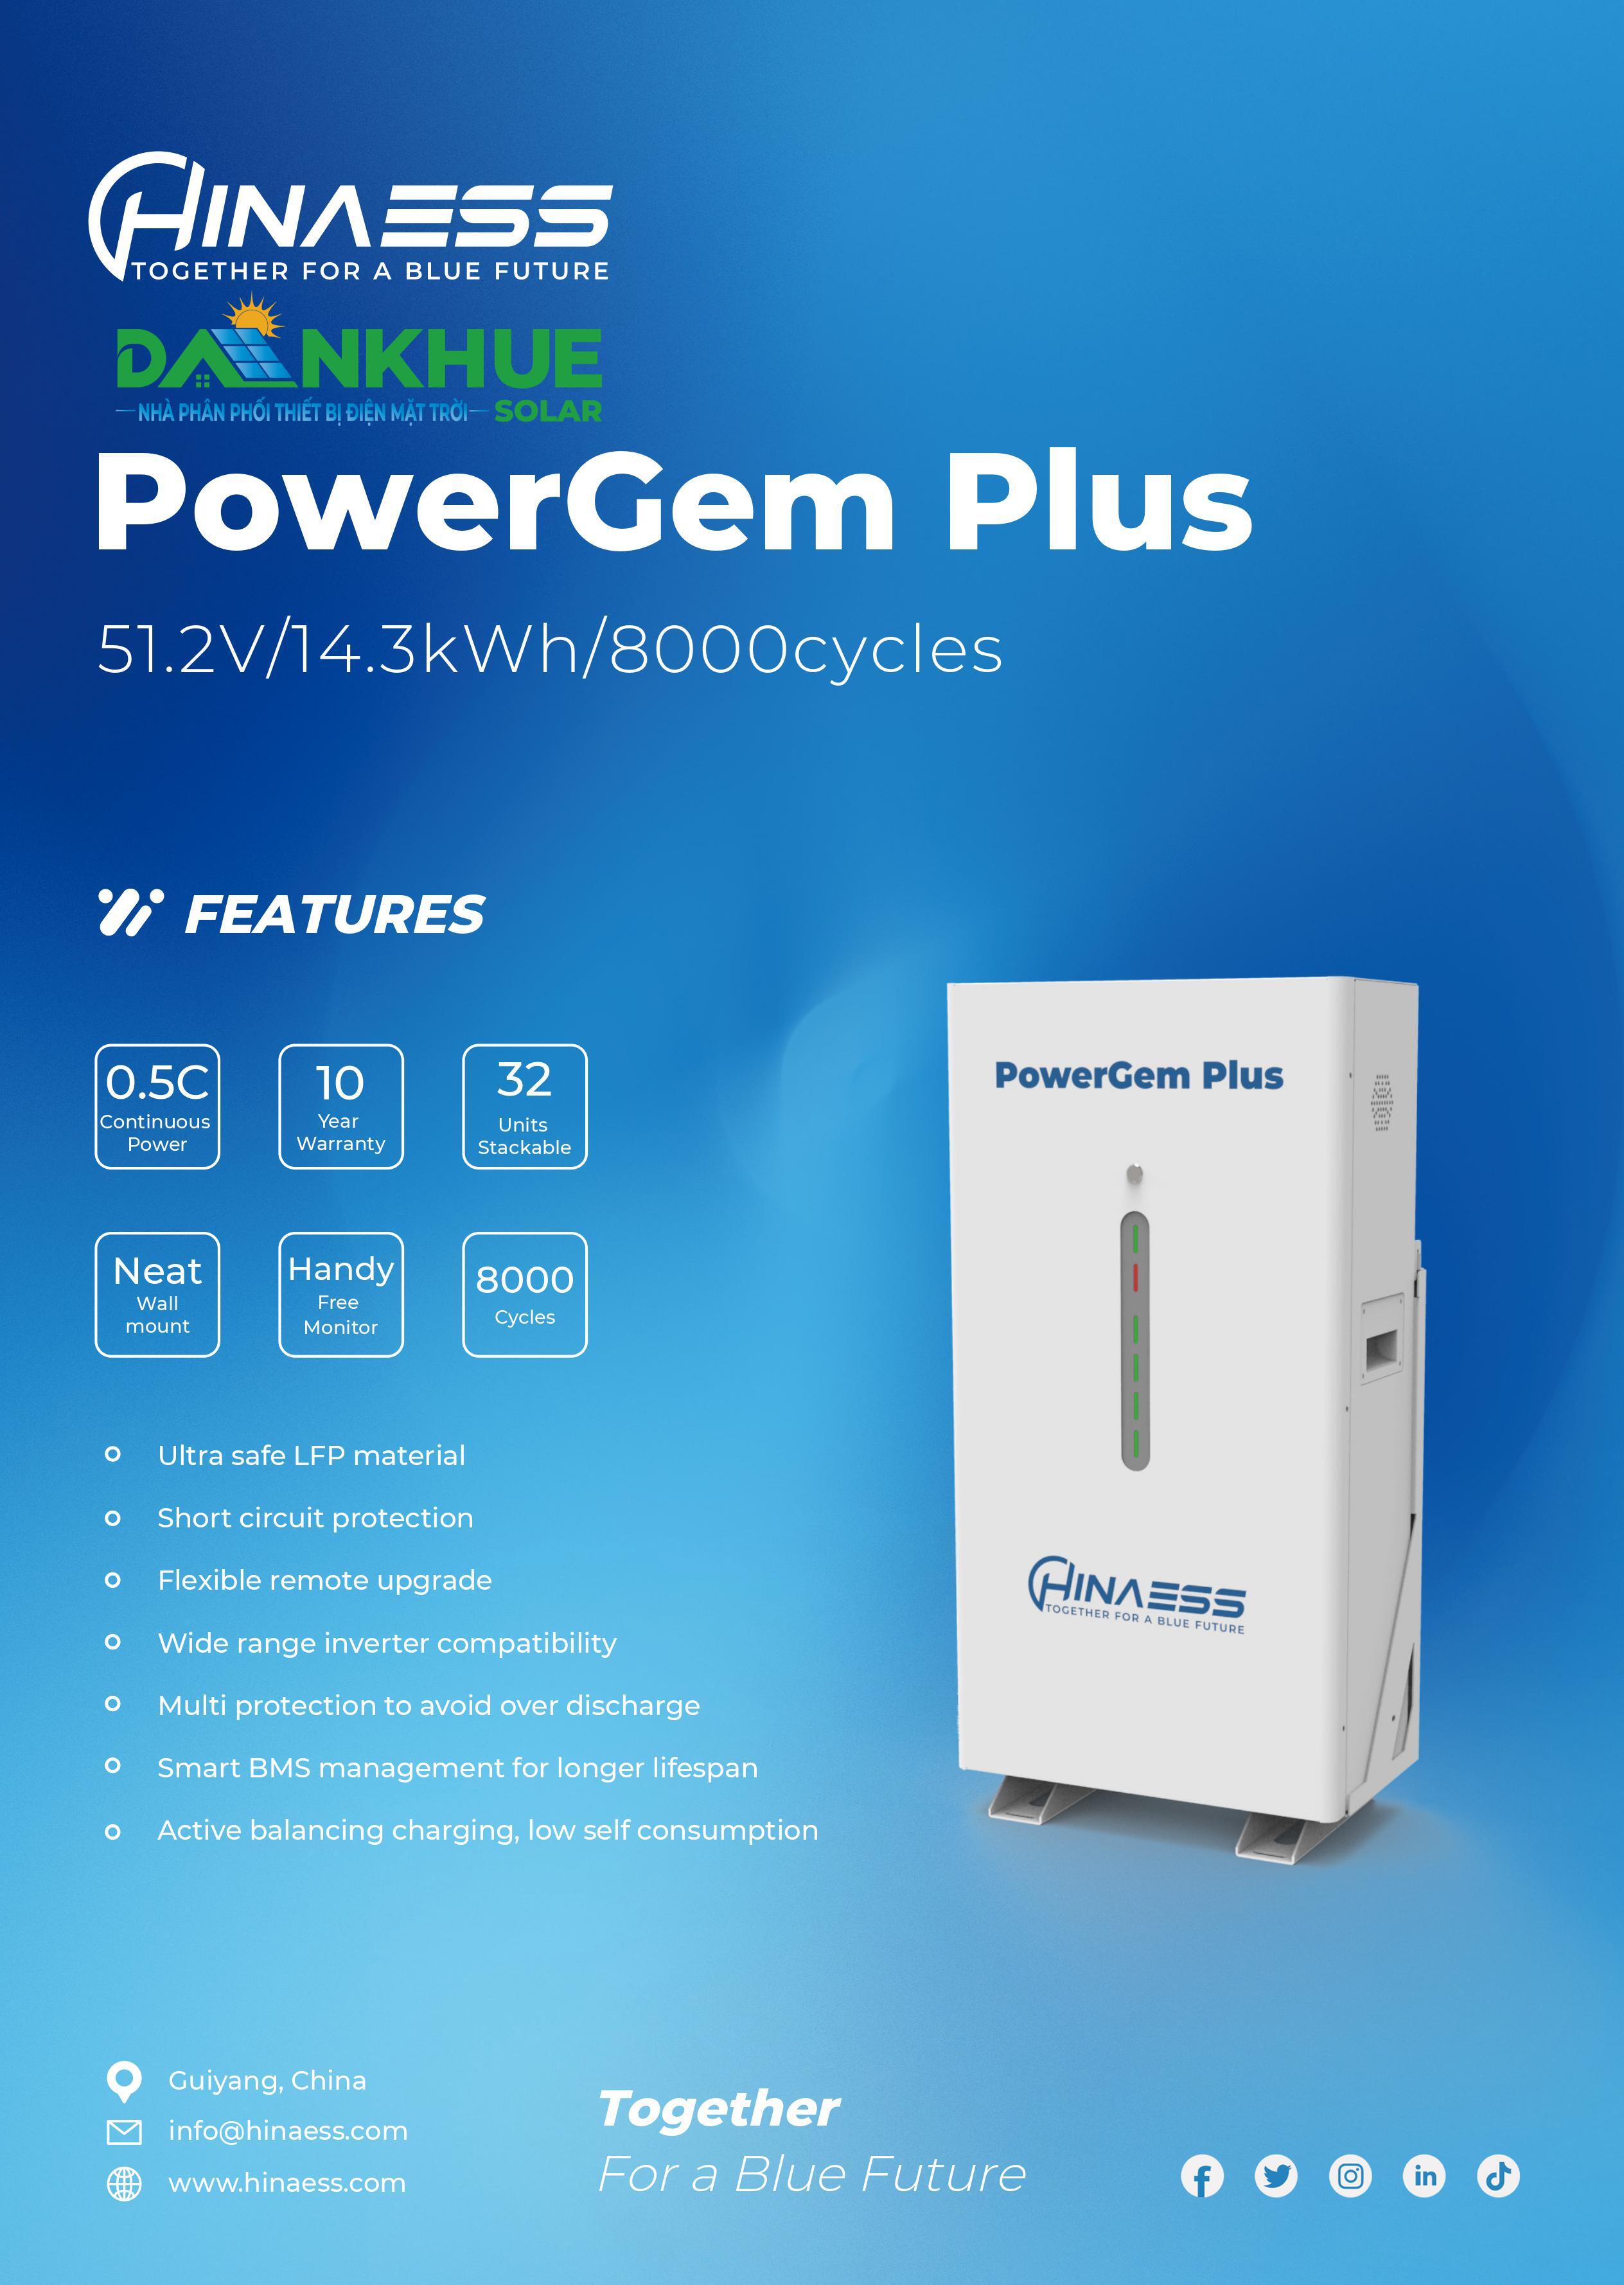 Datasheet pin lưu trữ lithium Hinaess PowerGem Plus 14.3kWh